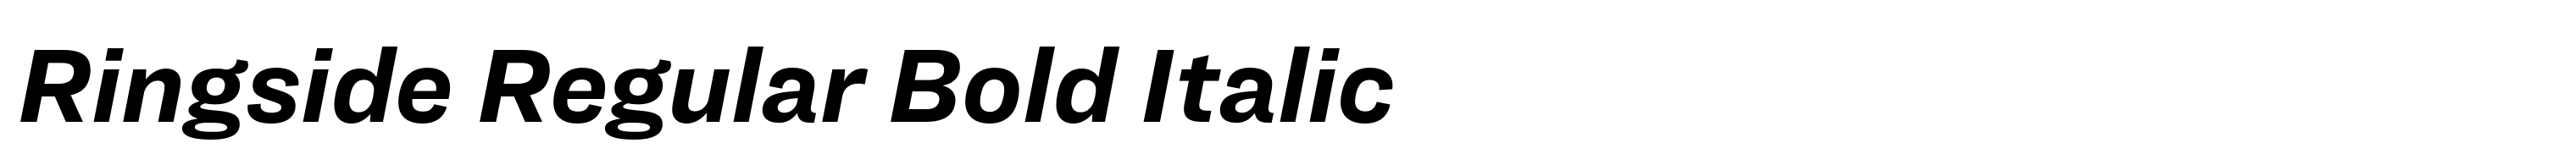 Ringside Regular Bold Italic